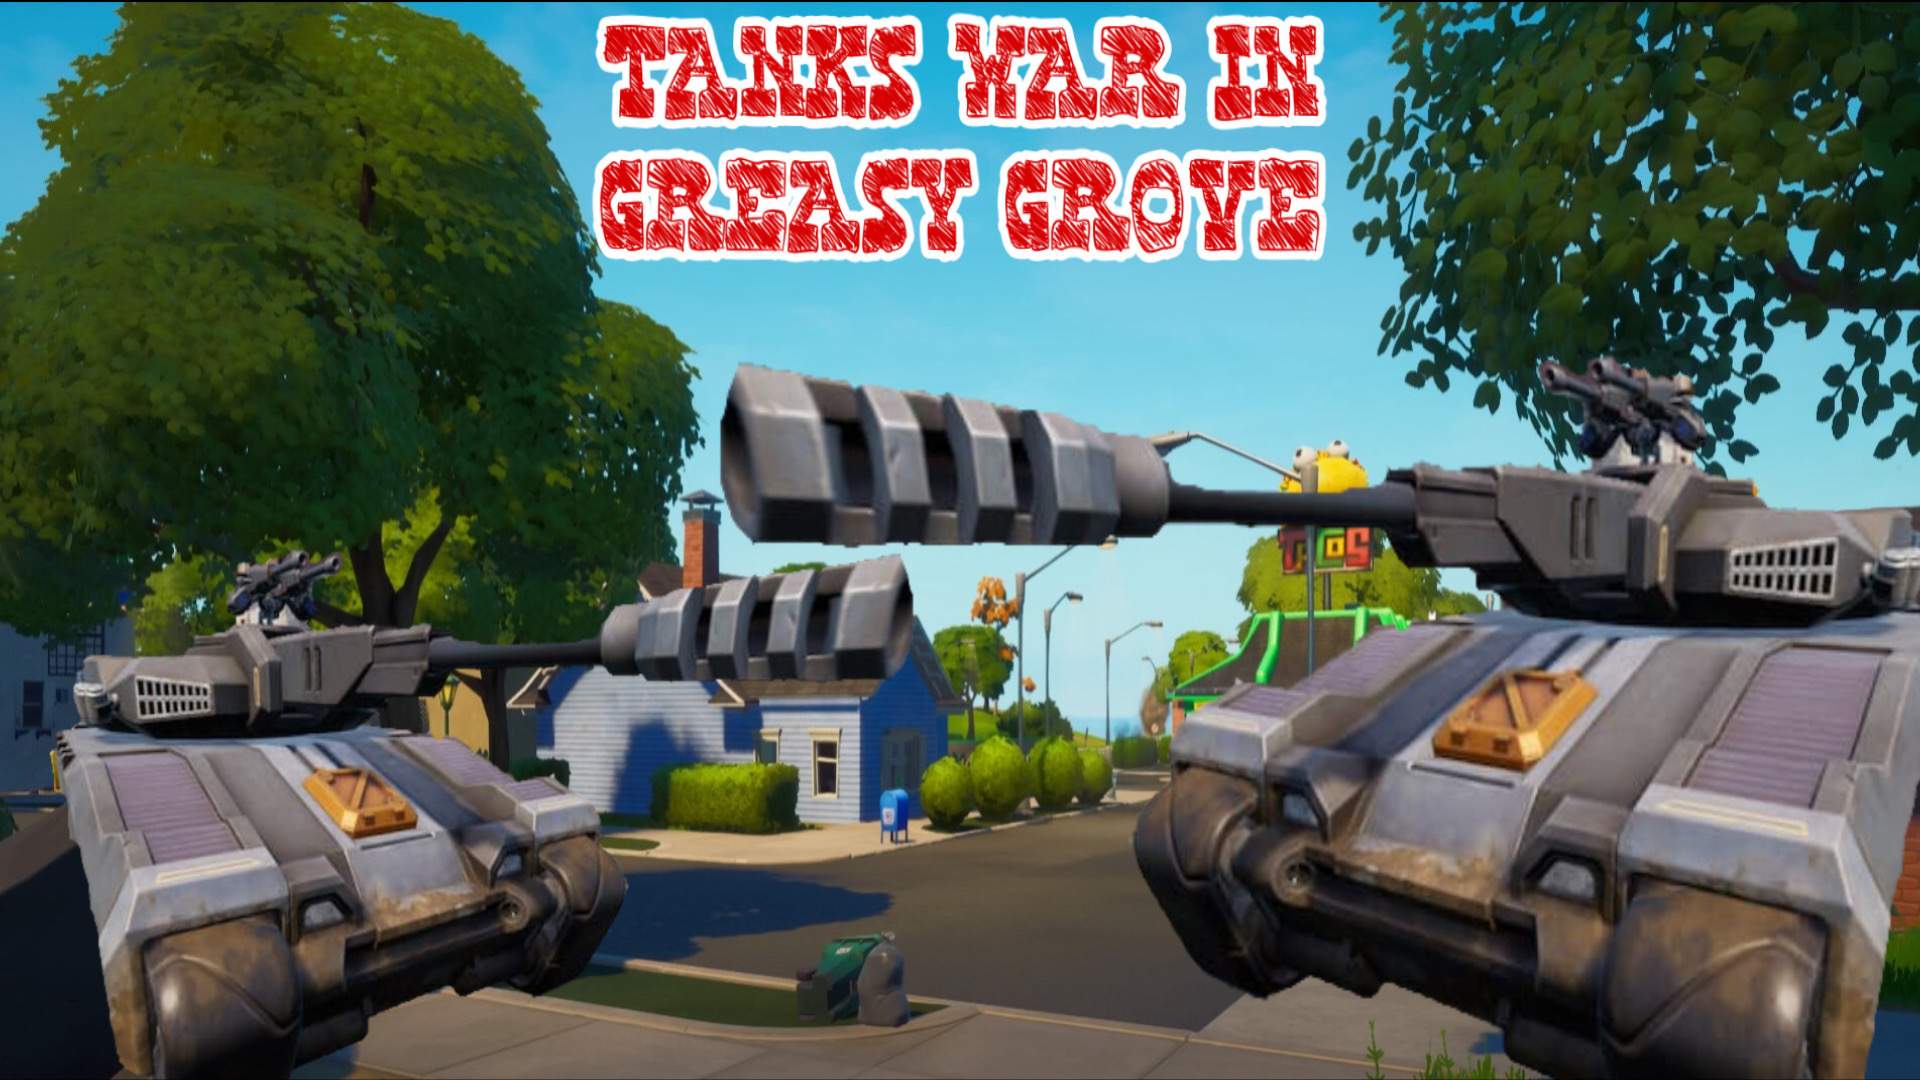 Tanks war in greasy grove